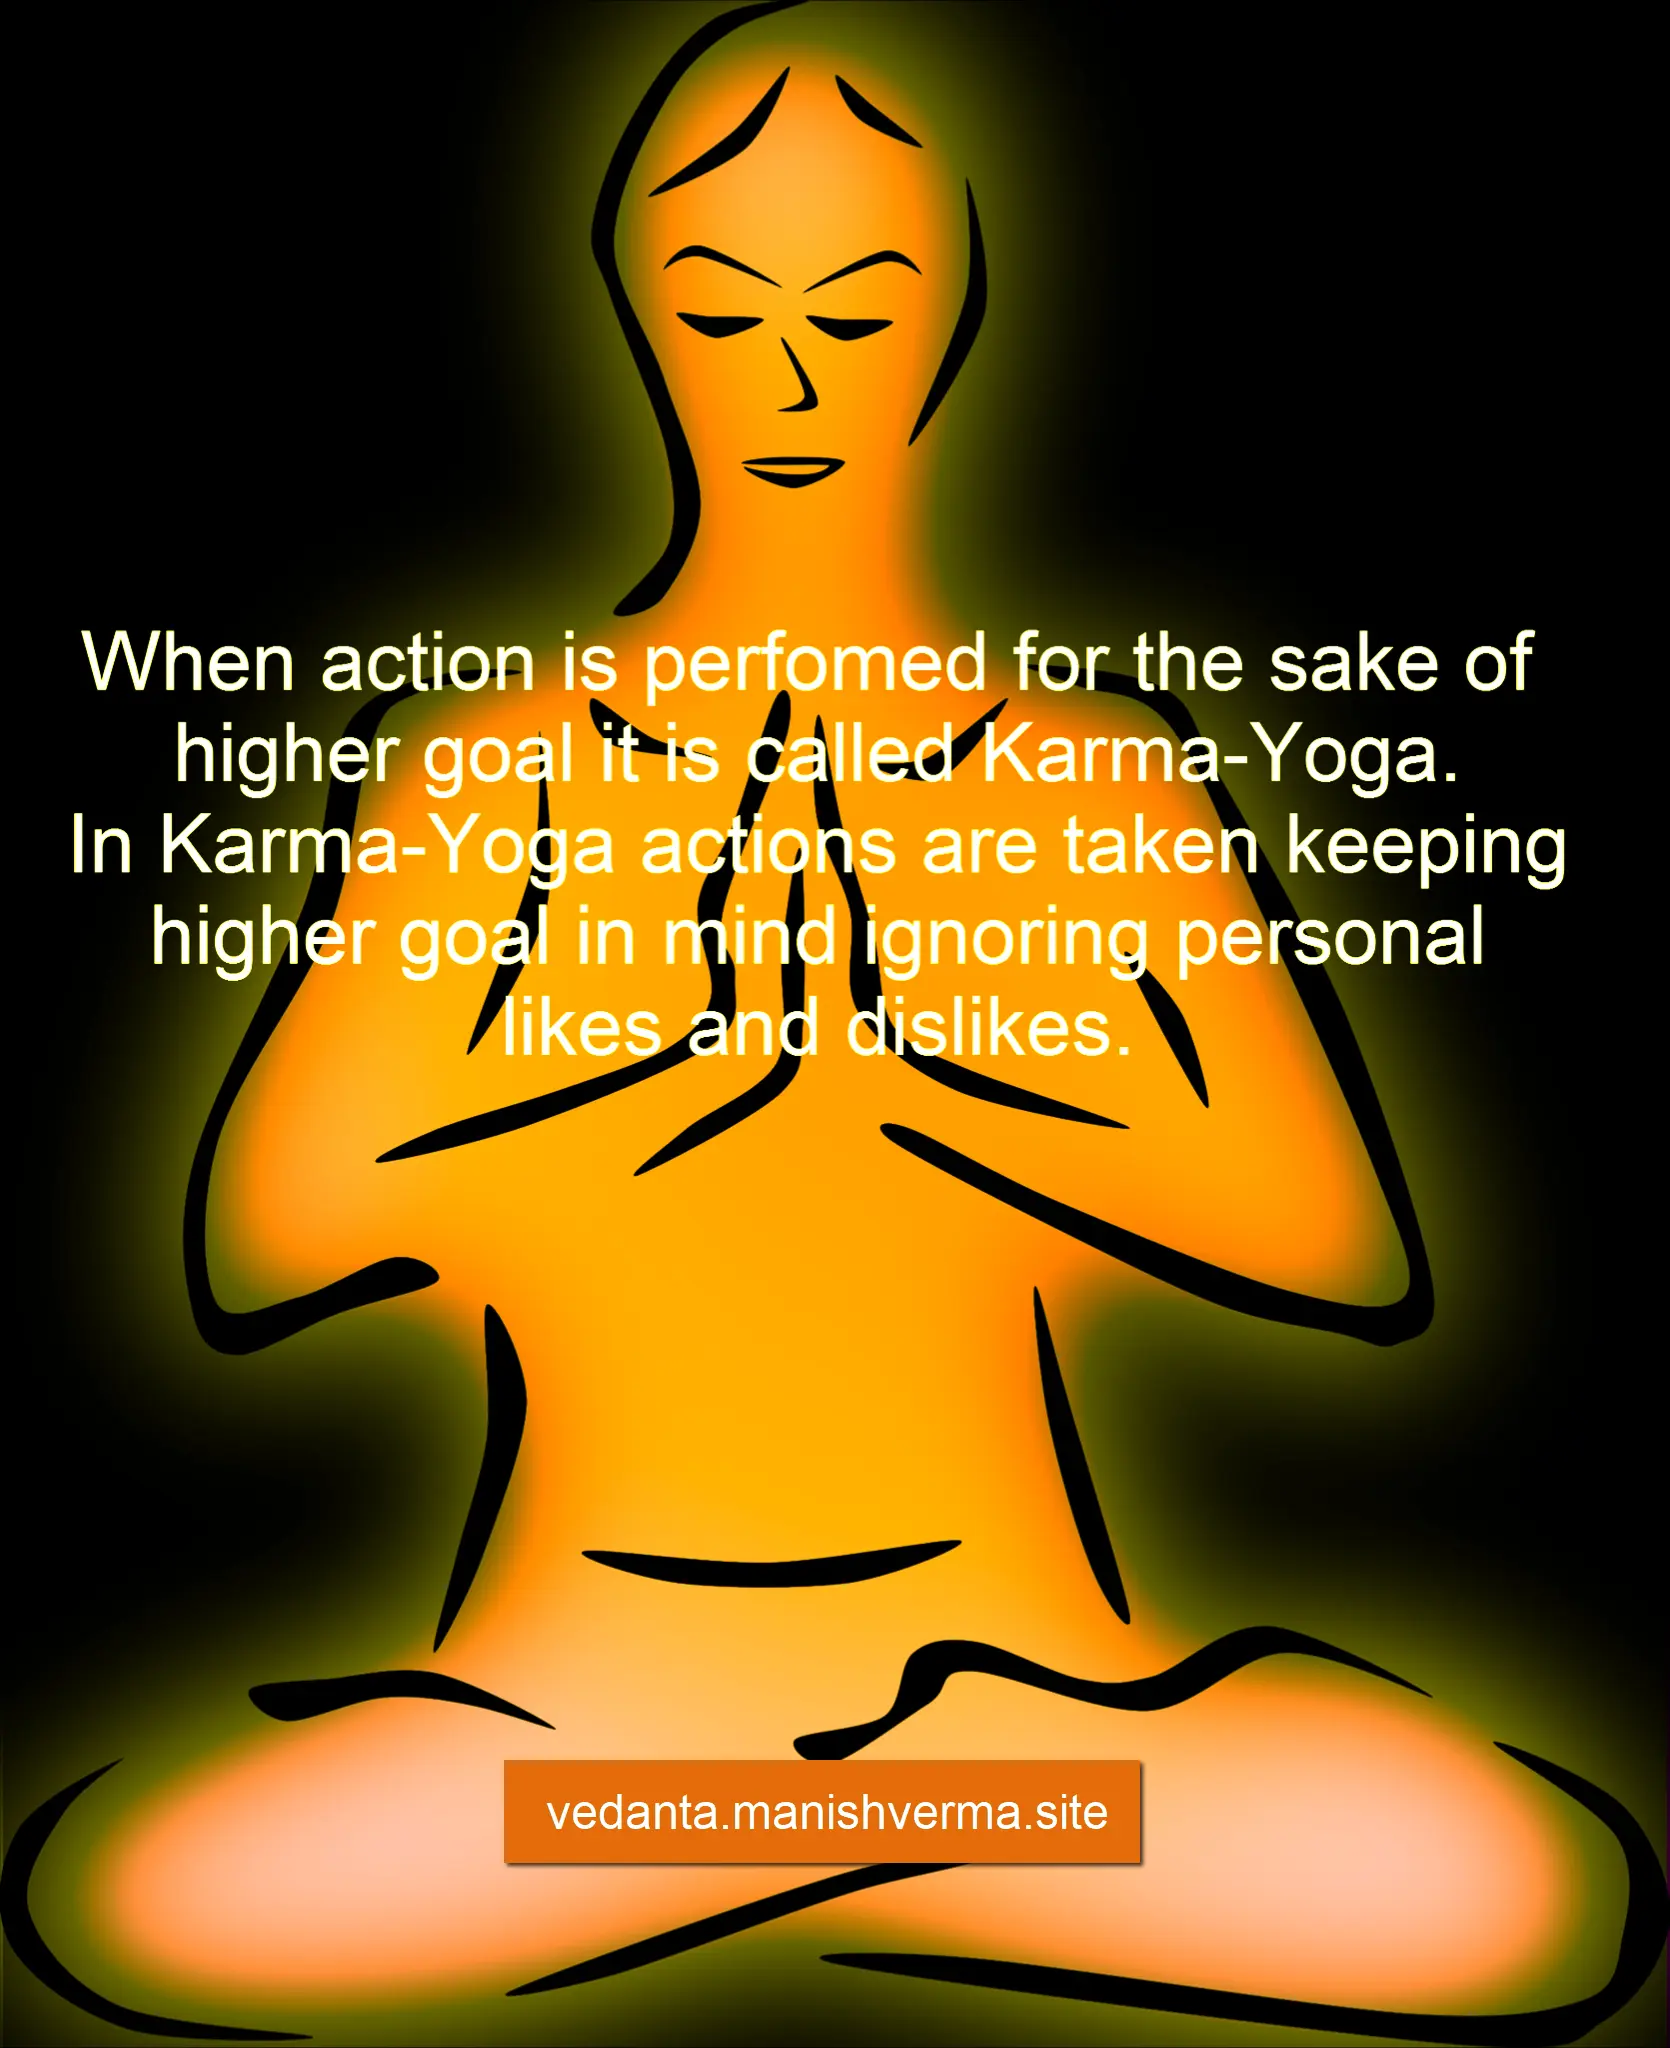 karma yoga definition - How is Karma Yoga practiced